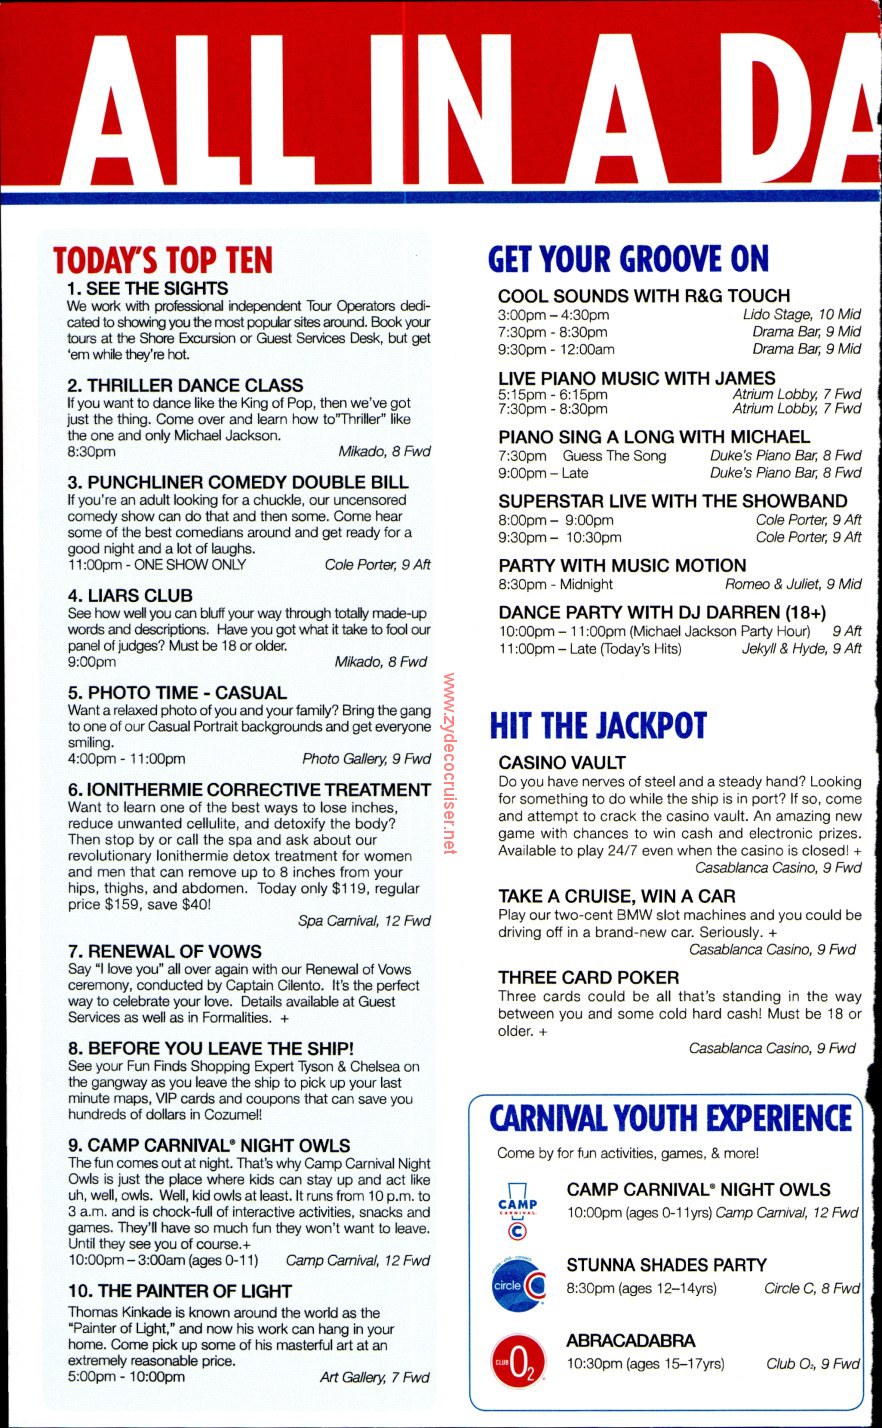 014: Carnival Elation 5 Day Fun Times, Feb 6, 2013, Page 2, 